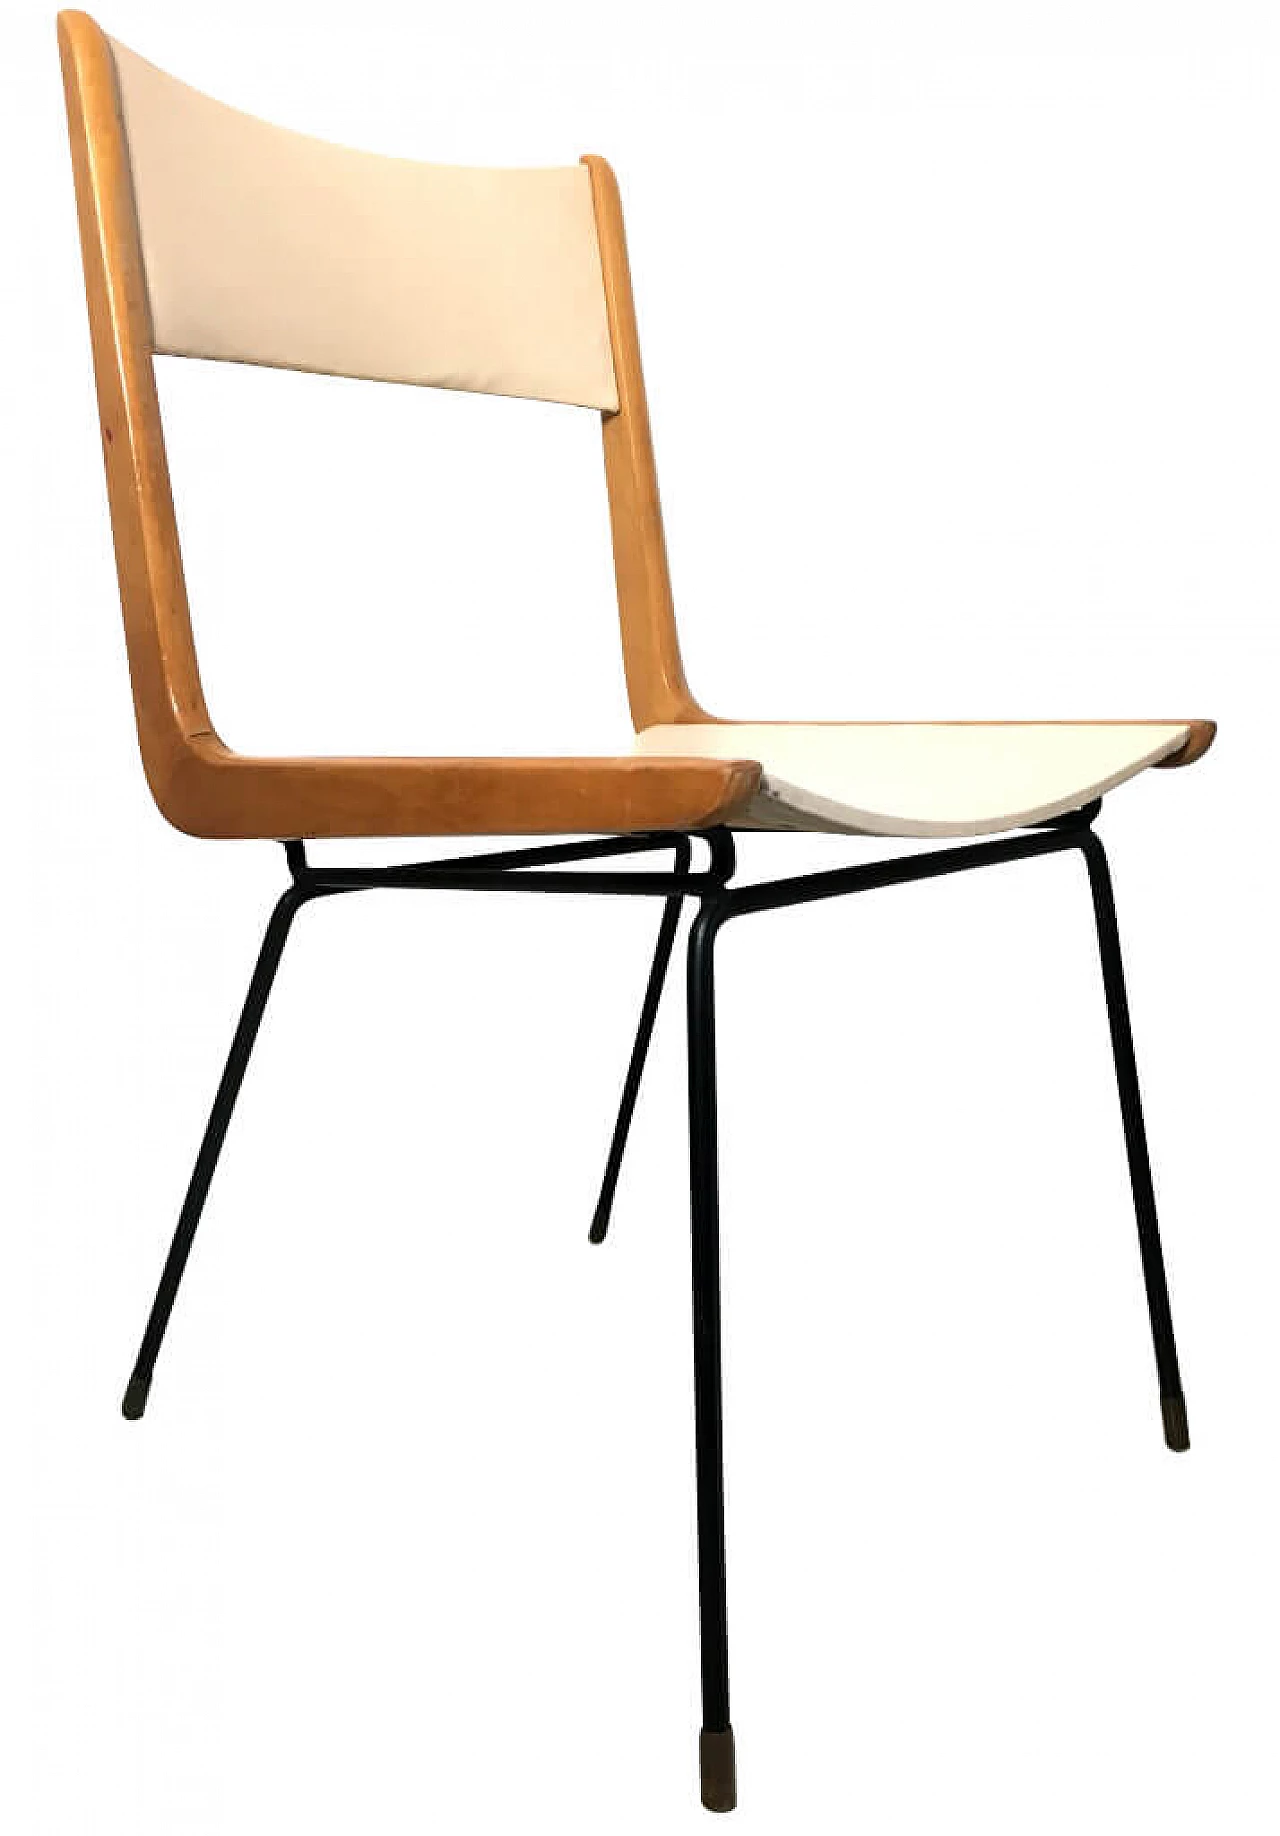 Boomerang chair by Carlo de Carli, 1950s 1183276